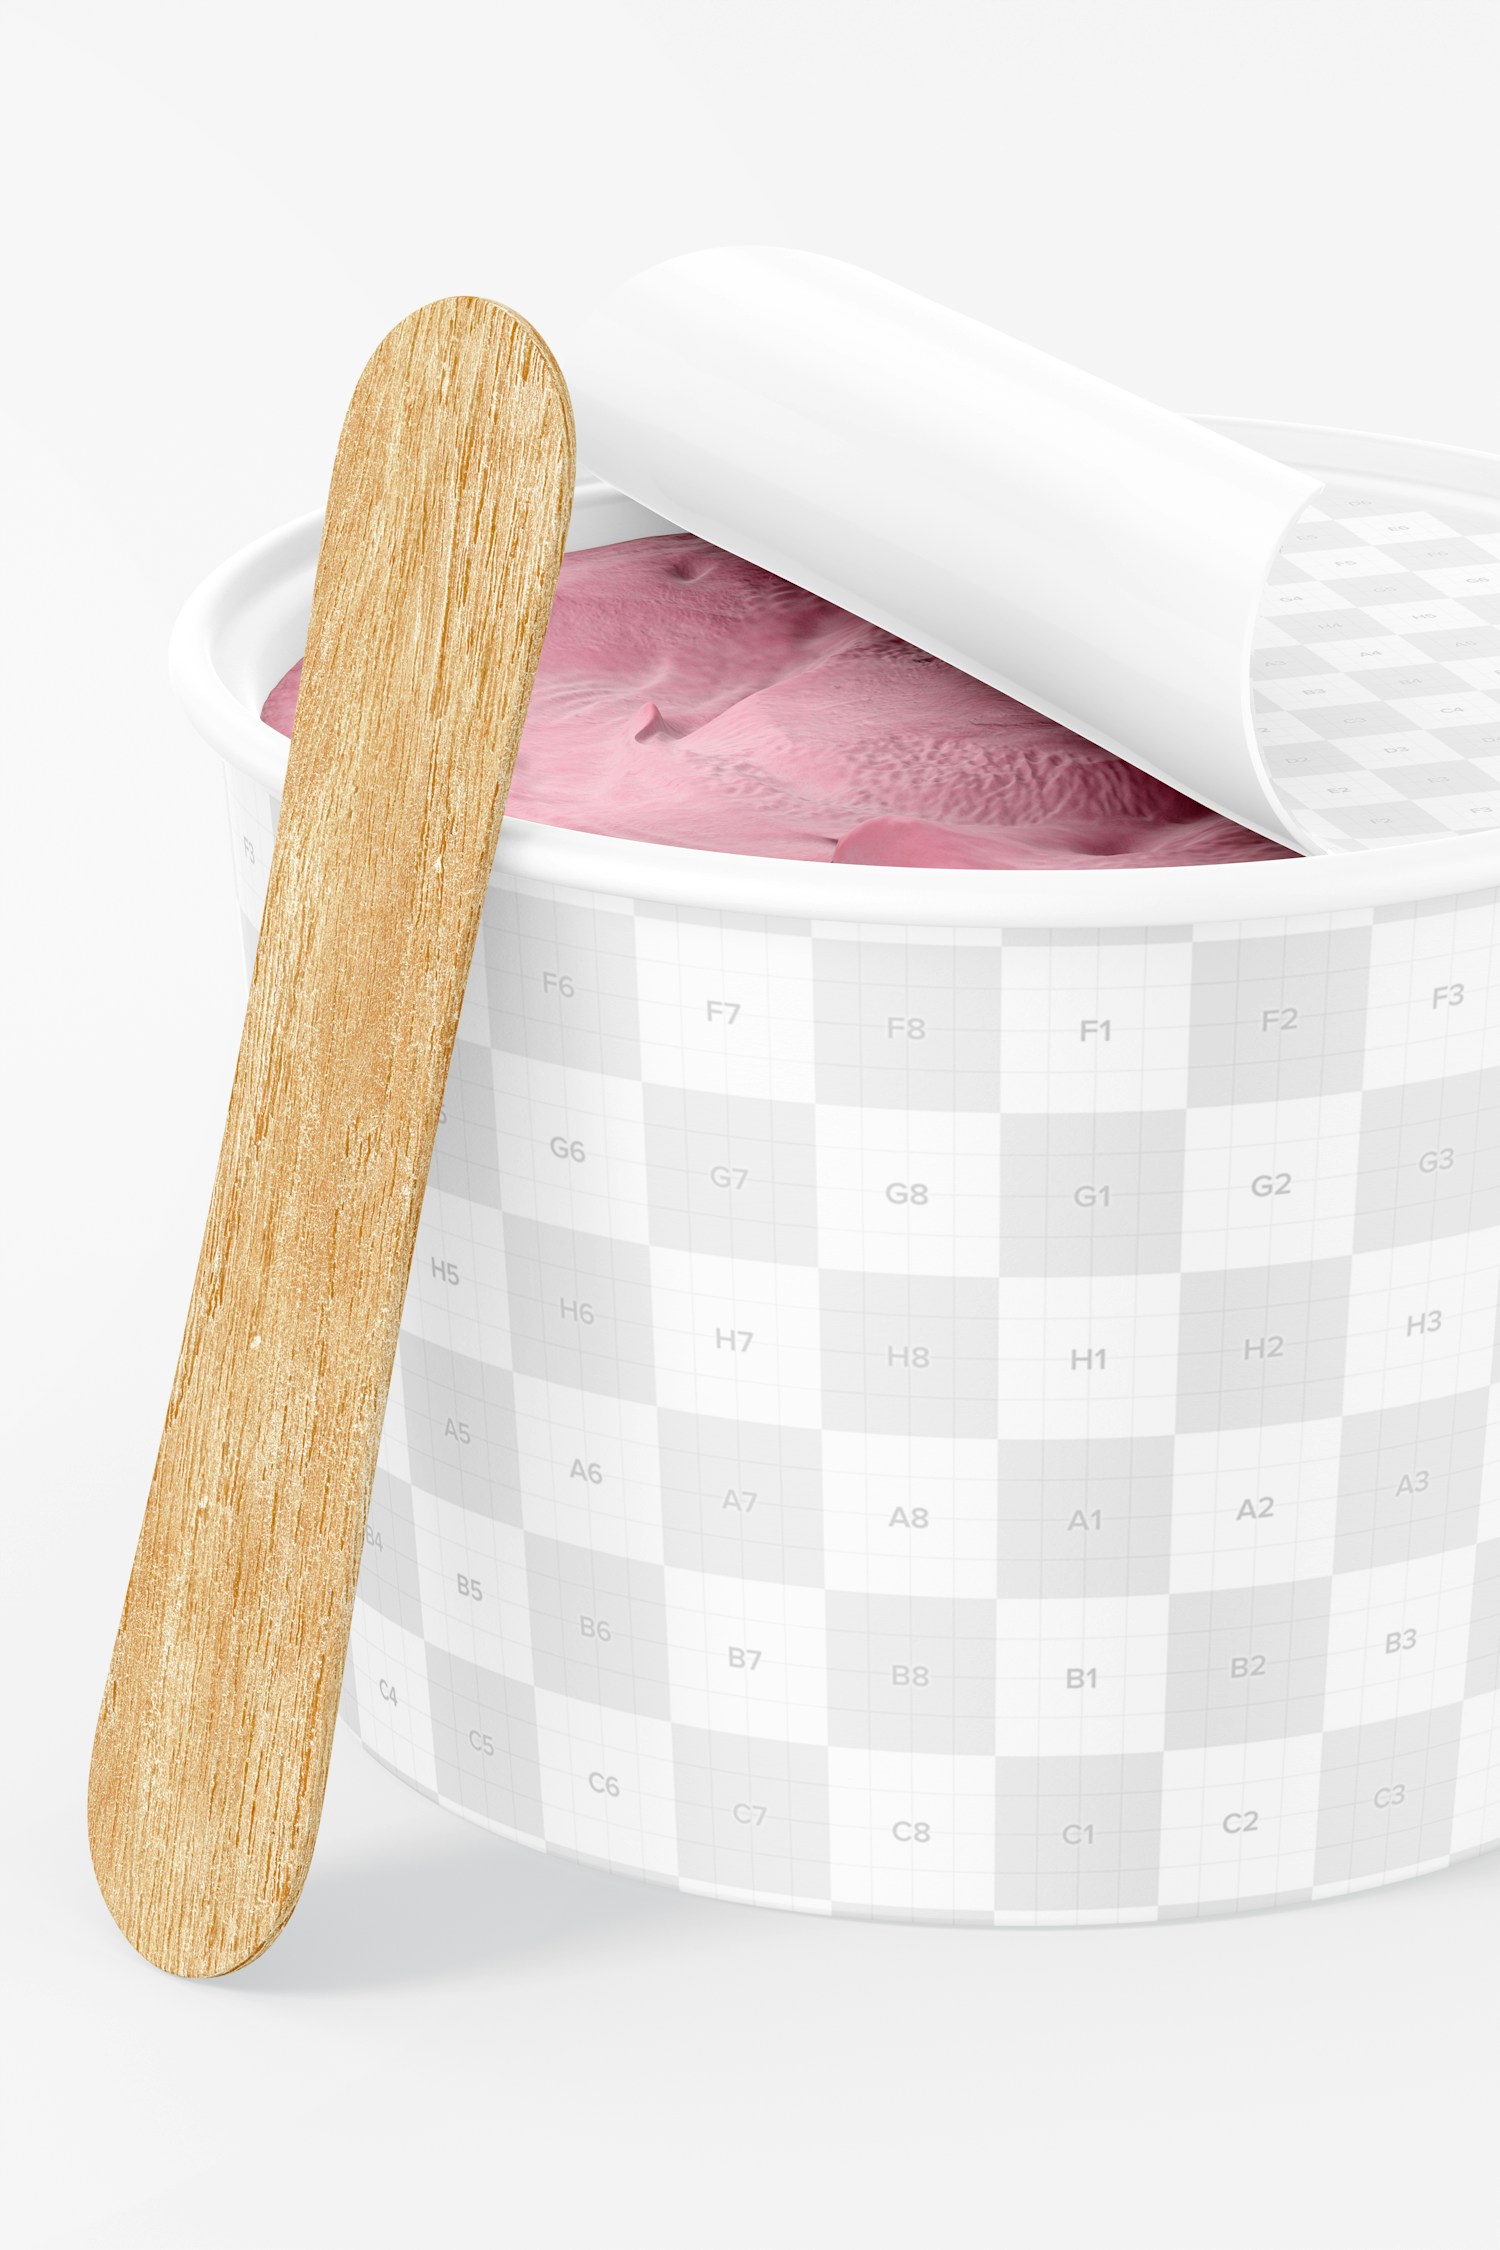 4 oz Cardboard Ice Cream Cup Mockup, Close Up